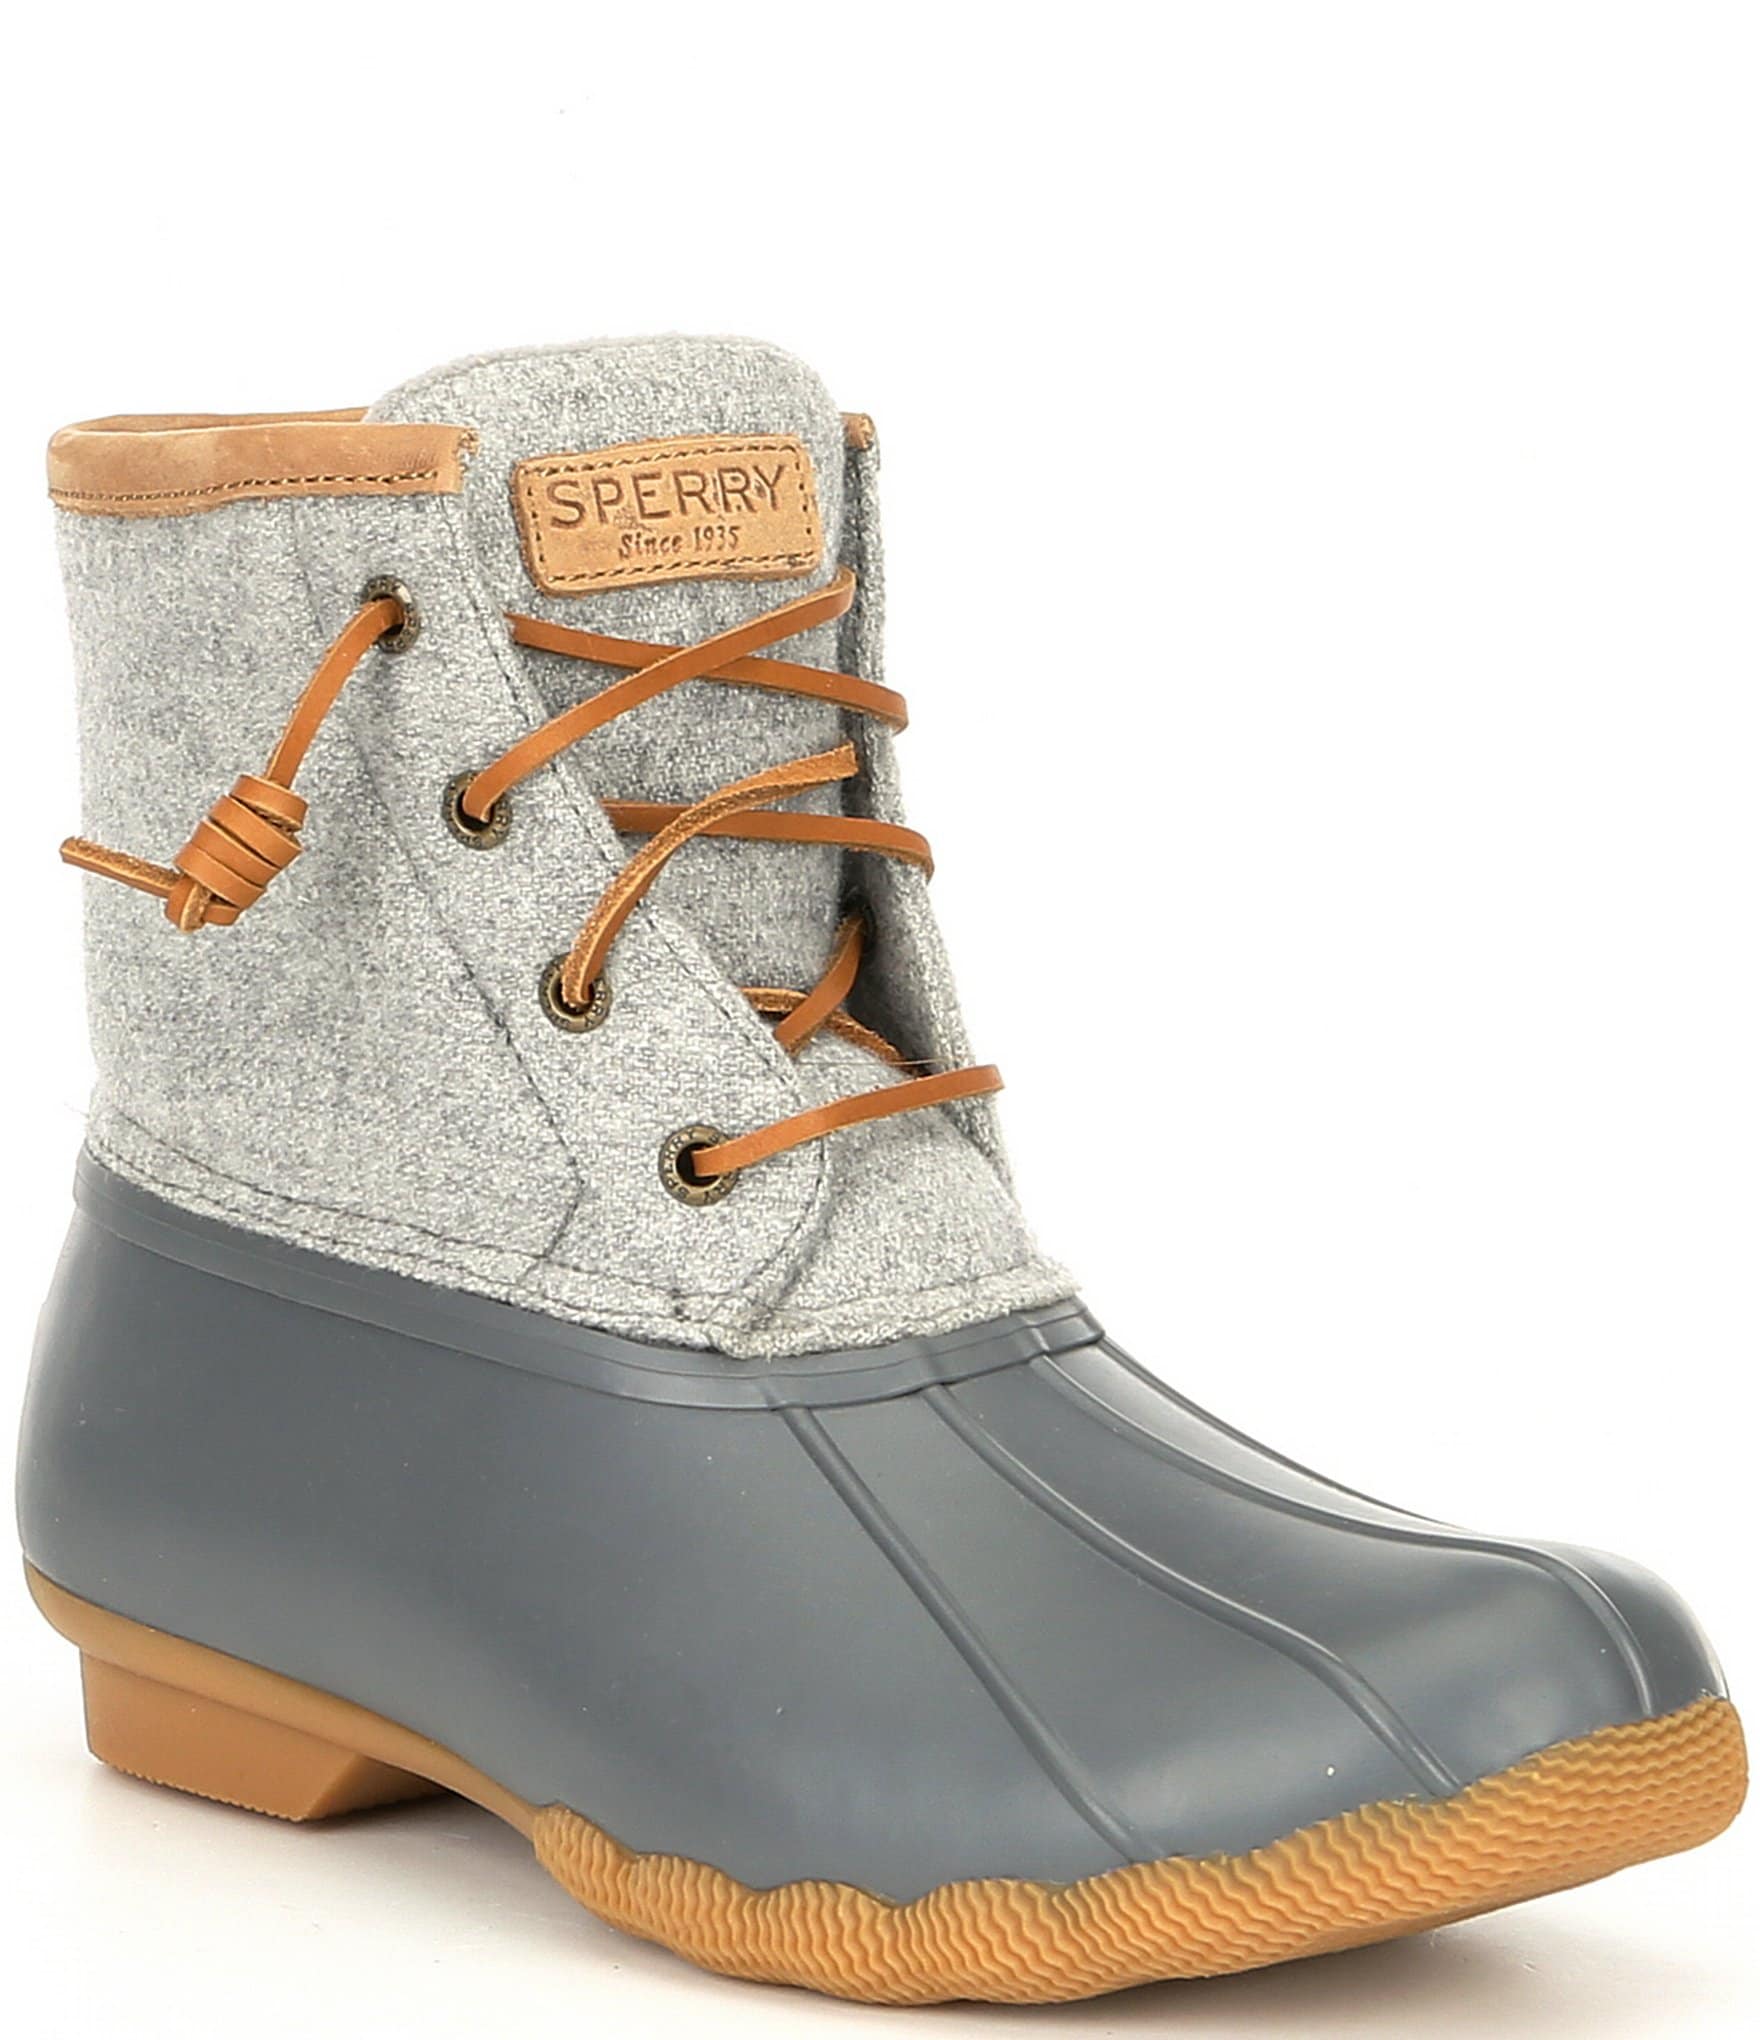 Sperry Shoes | Dillard's